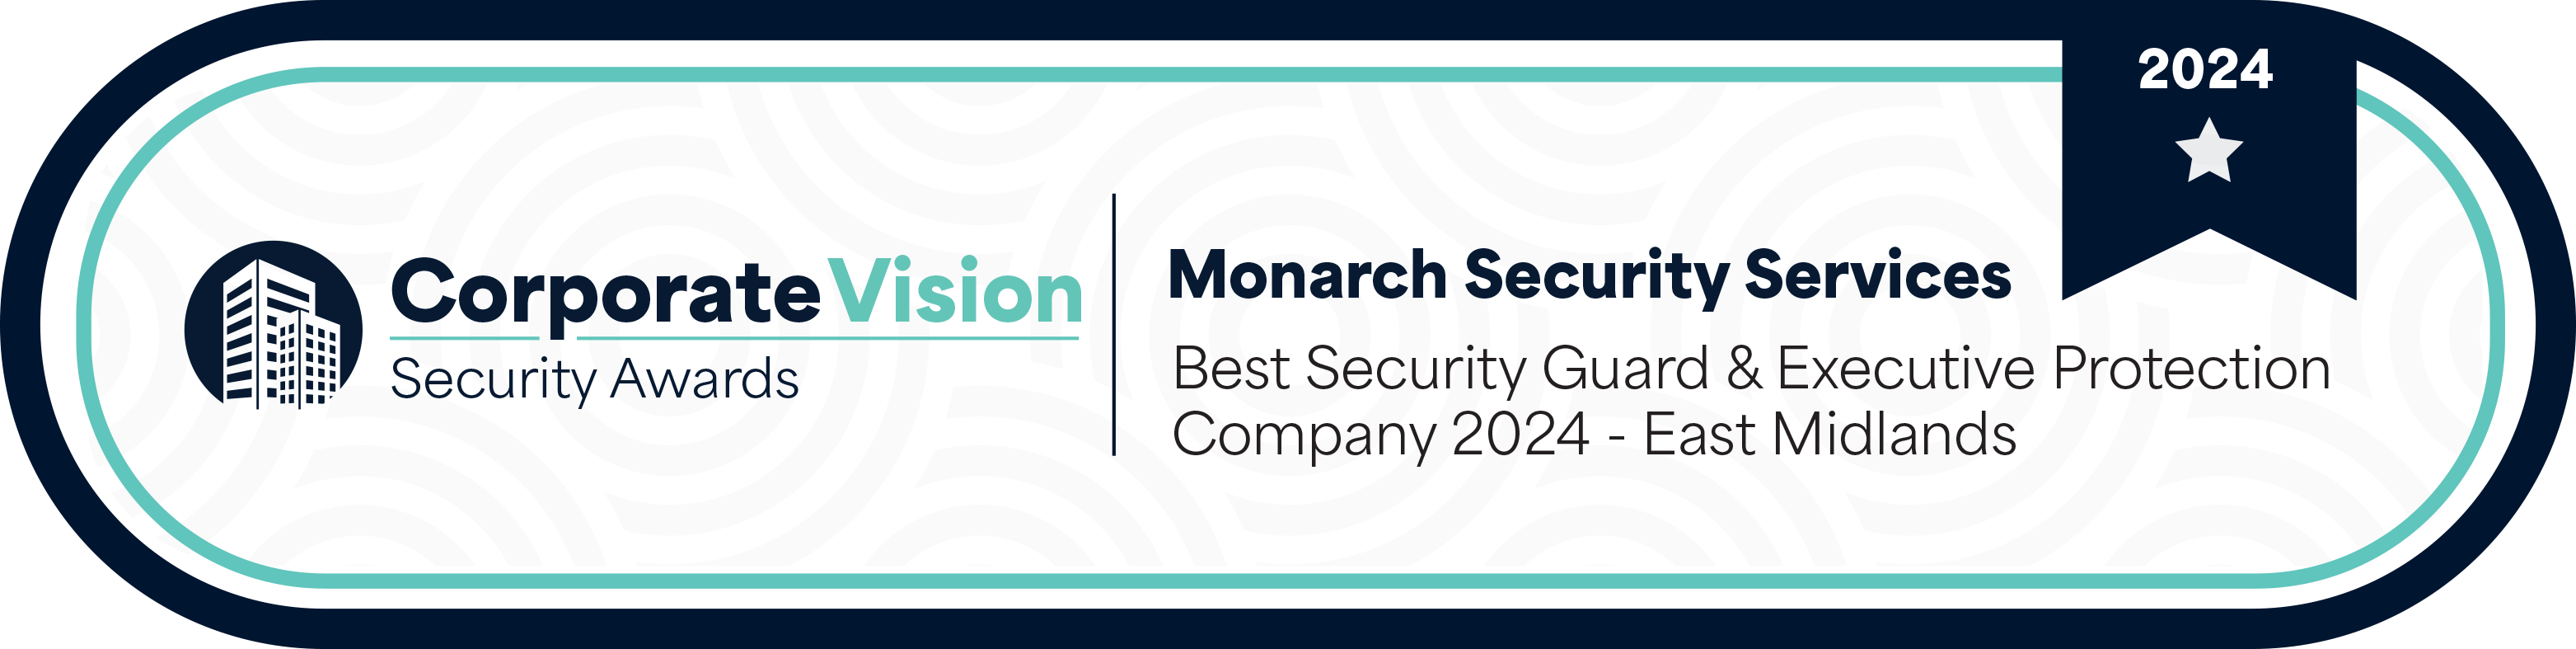 Corporate Vision Security Award Winner 2024